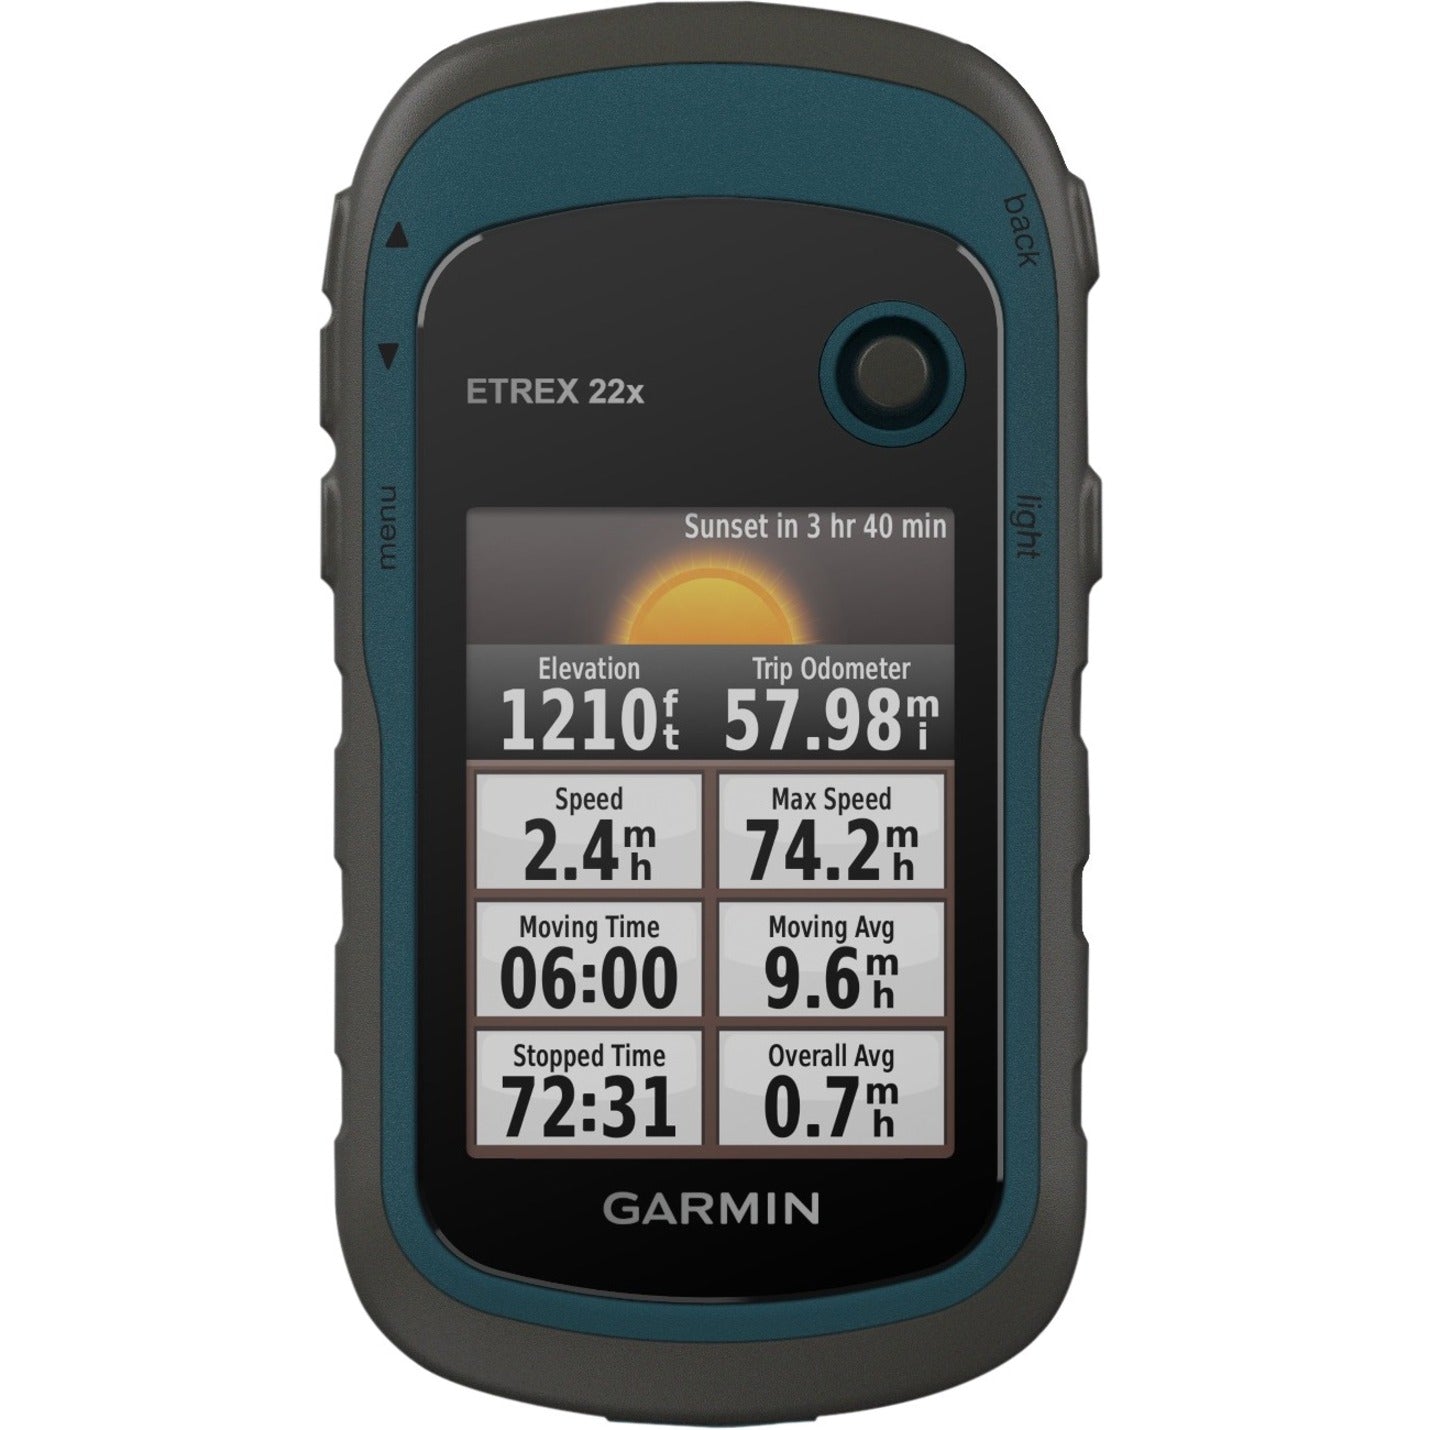 Garmin 010-02256-00 eTrex 22x Rugged Handheld GPS, 2.2" Color Display, Preloaded Maps